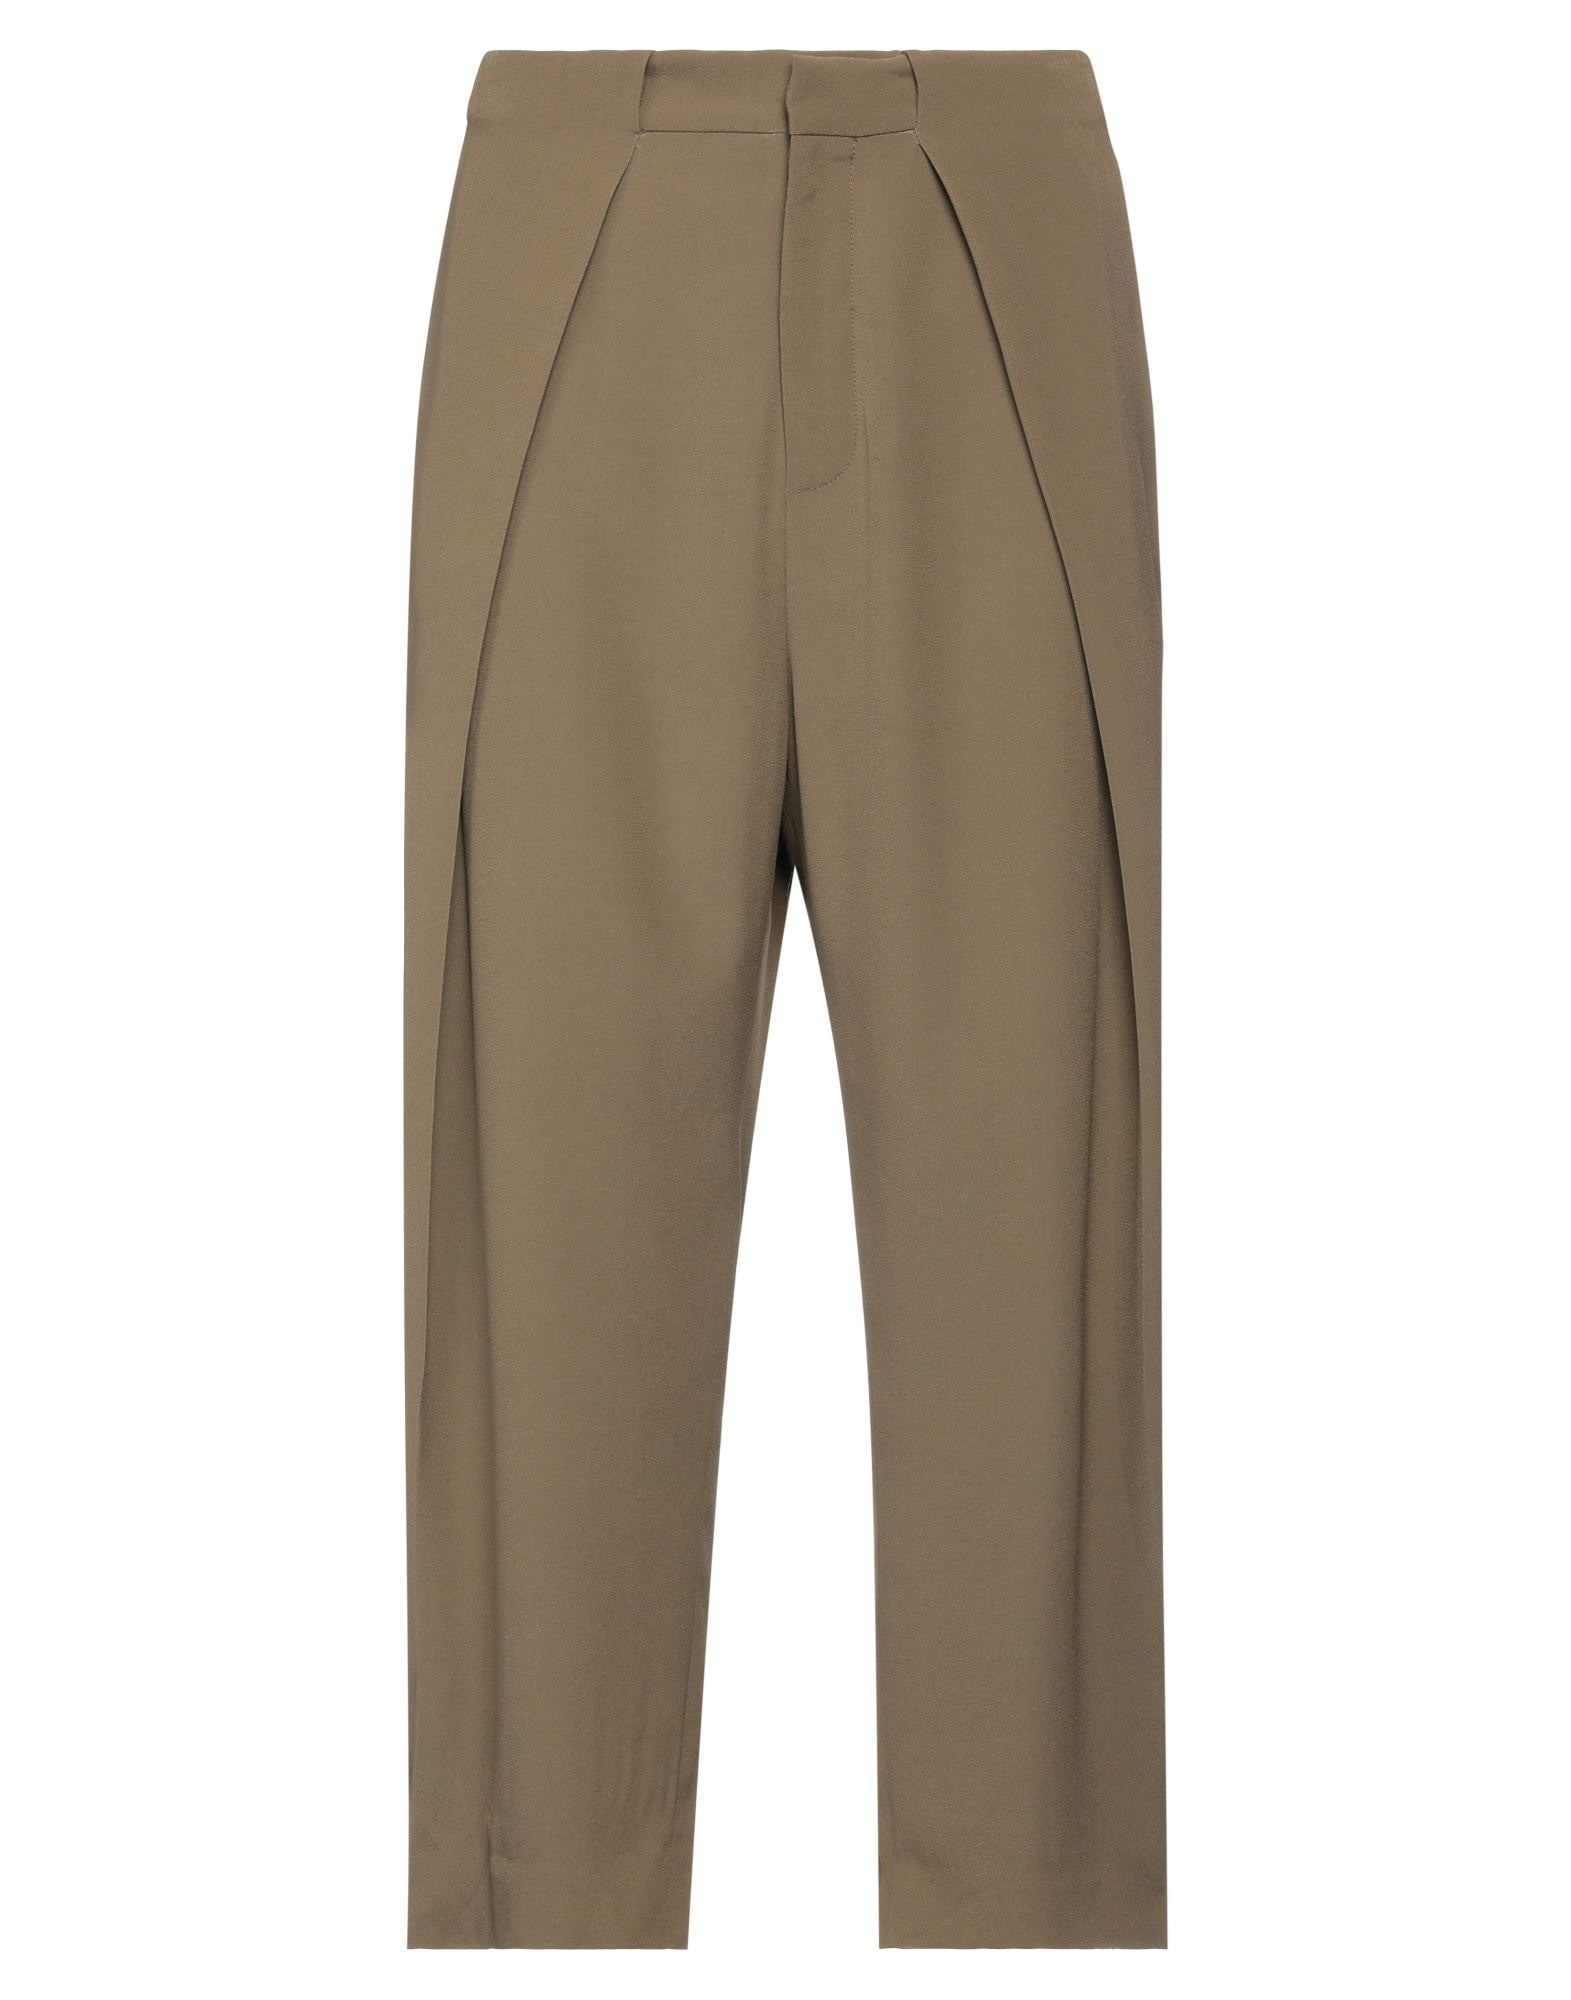 Khaki Men's Casual Pants - 1